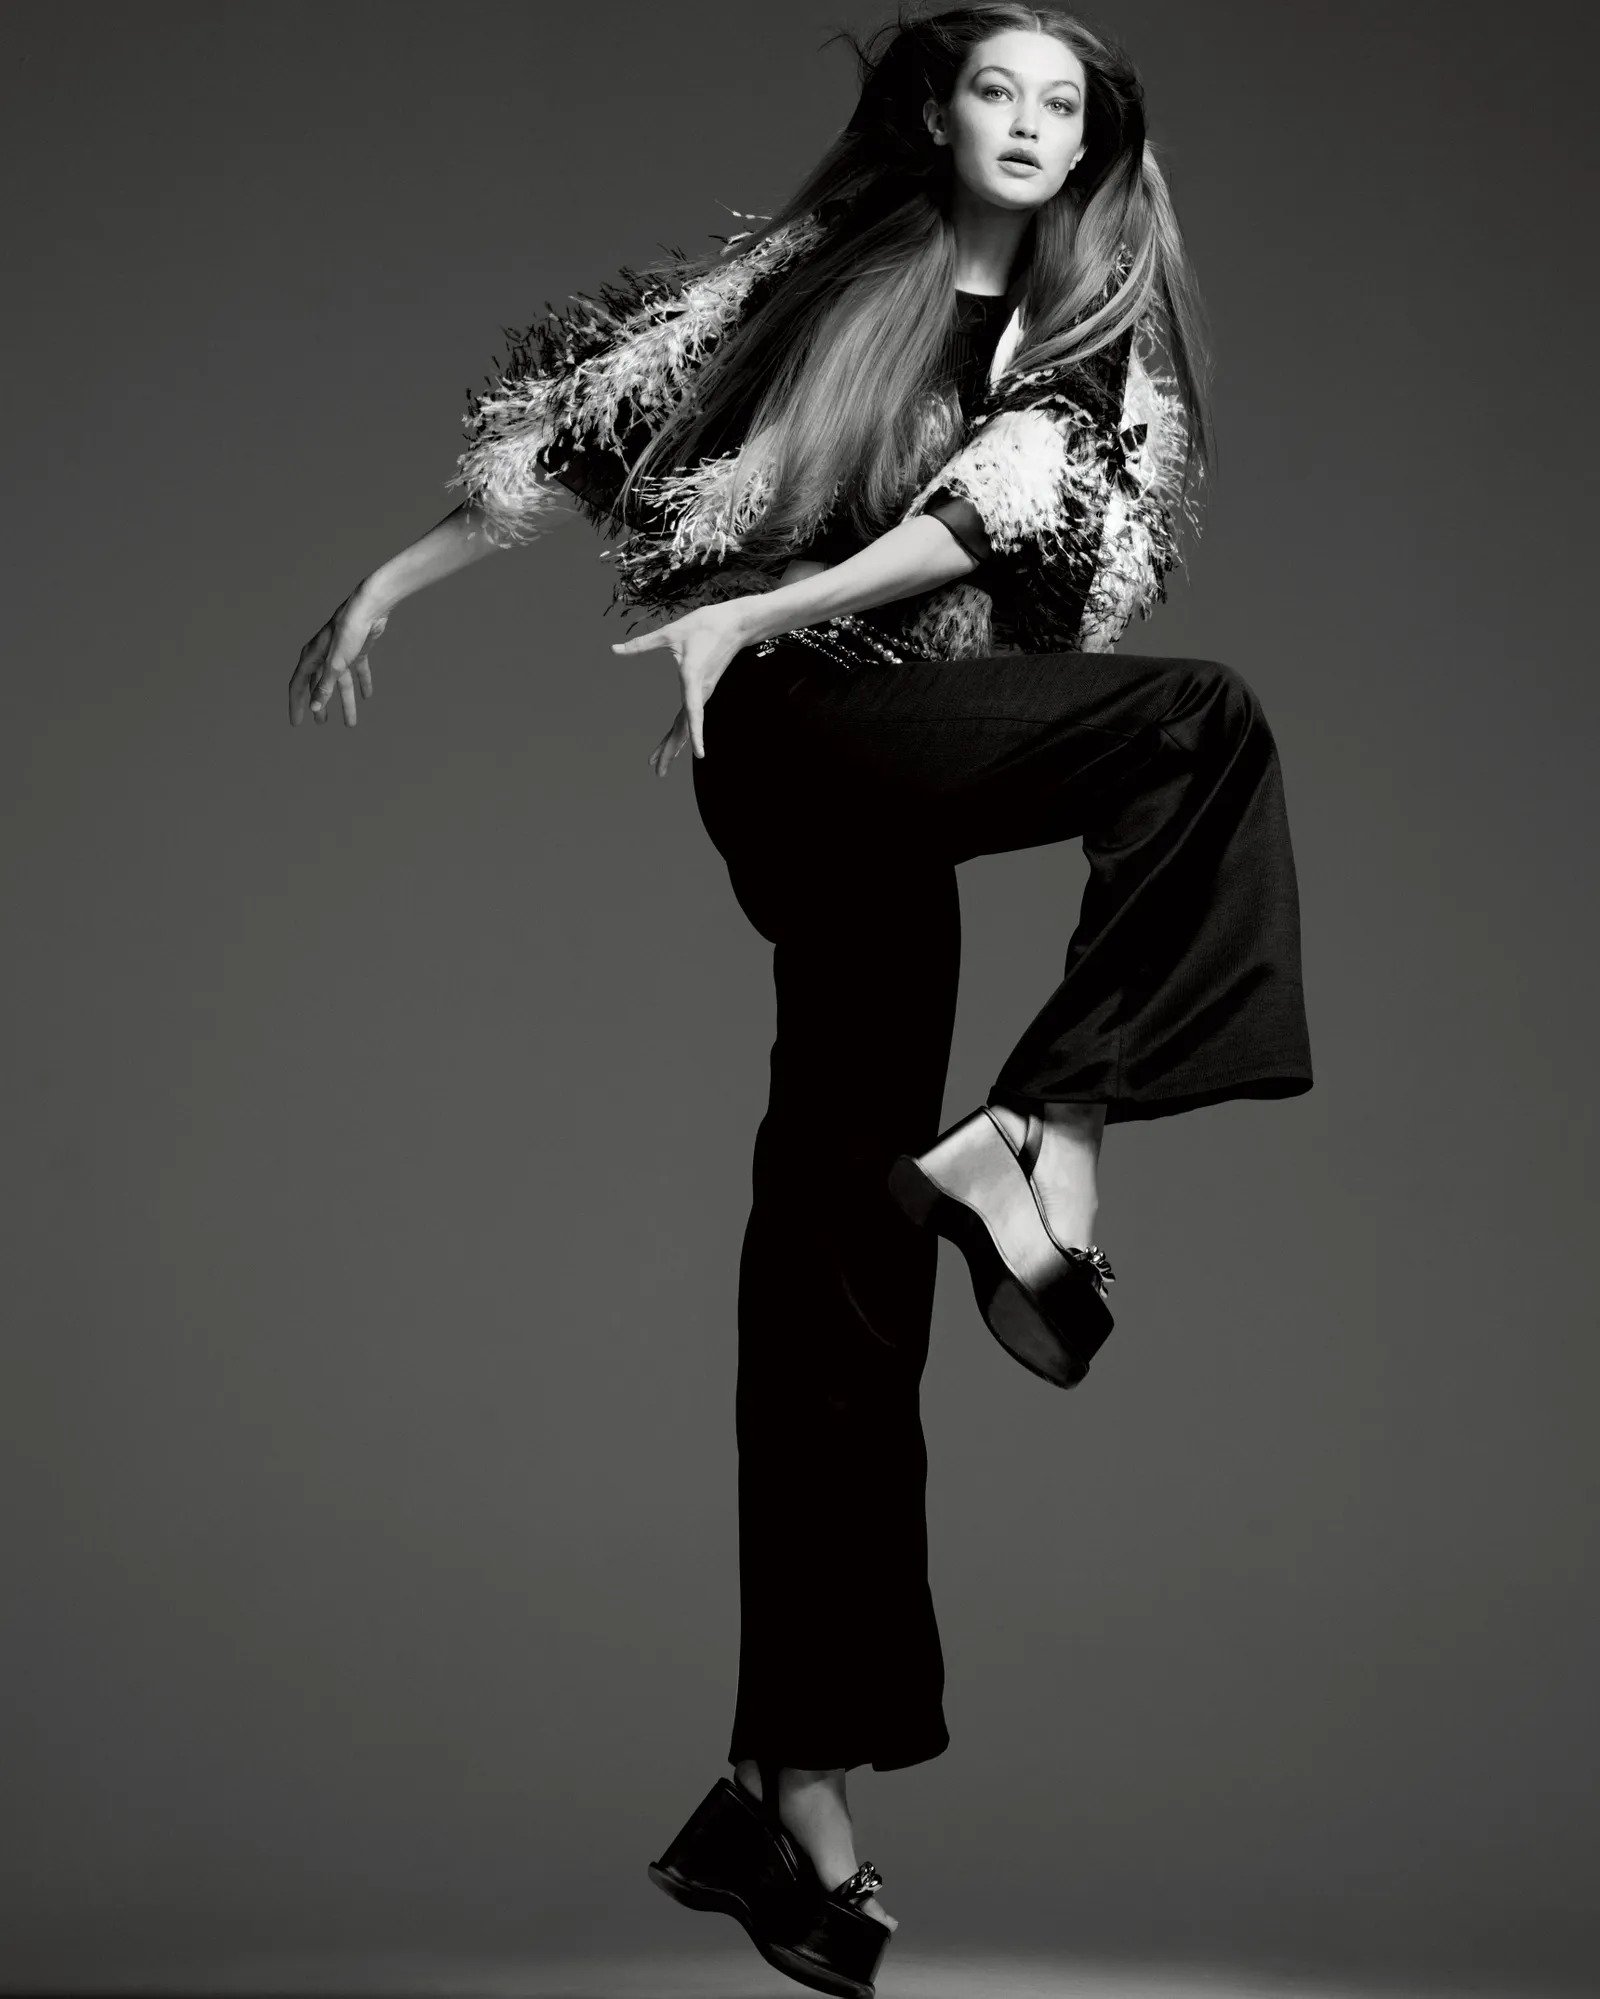 Photos n°6 : Gigi Hadid is Back in Vogue!